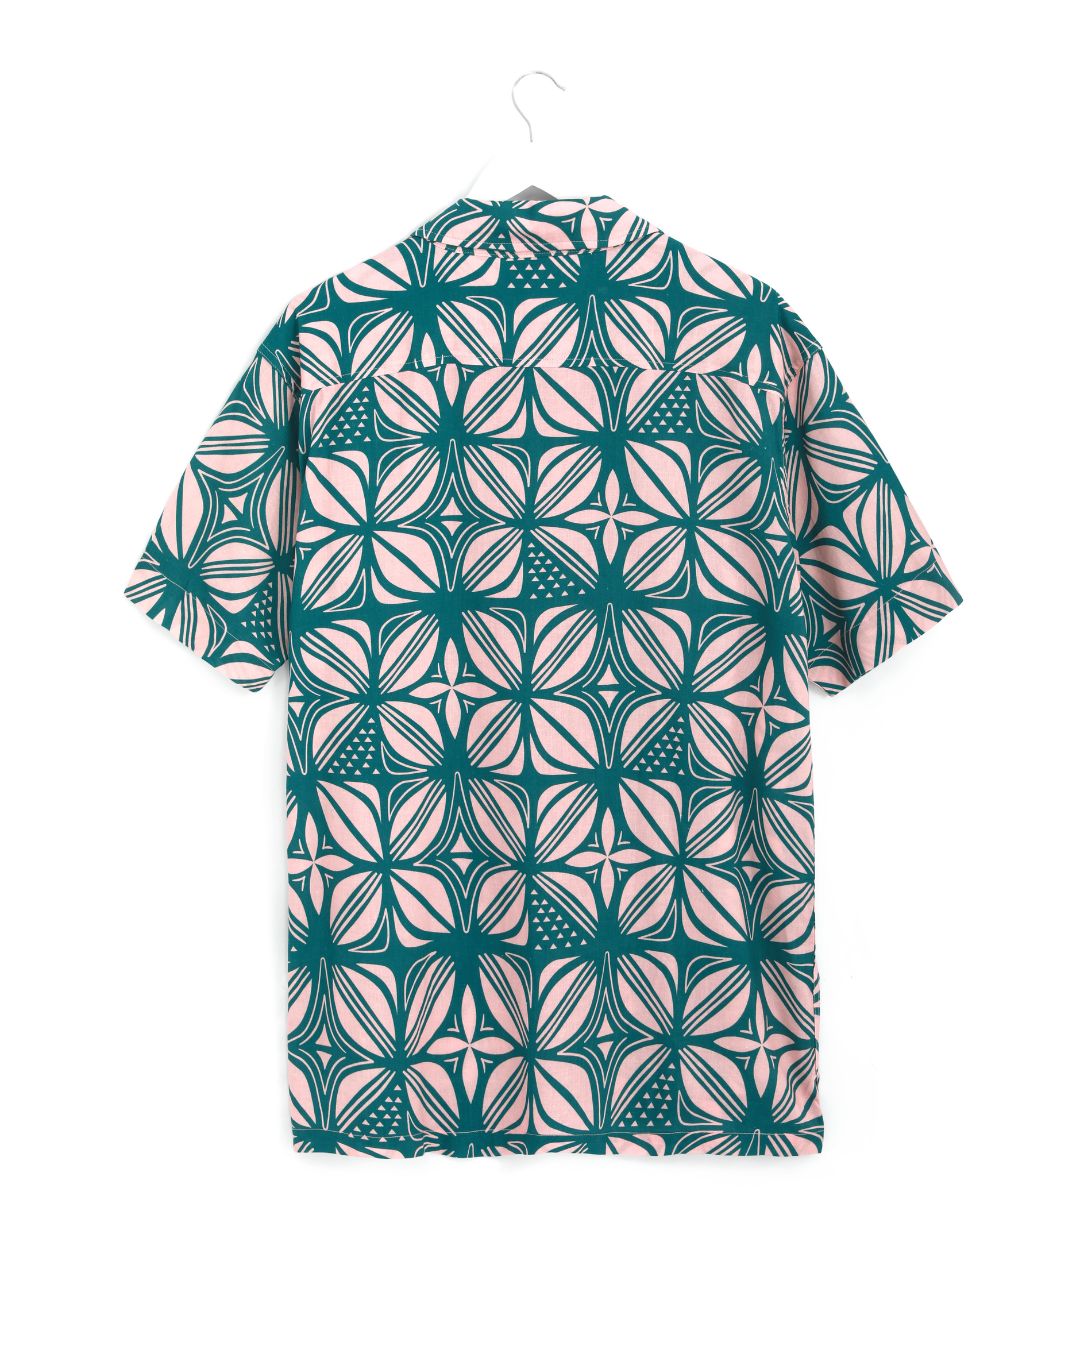 Kanoa II Mens Short Sleeve Island Shirt - Back